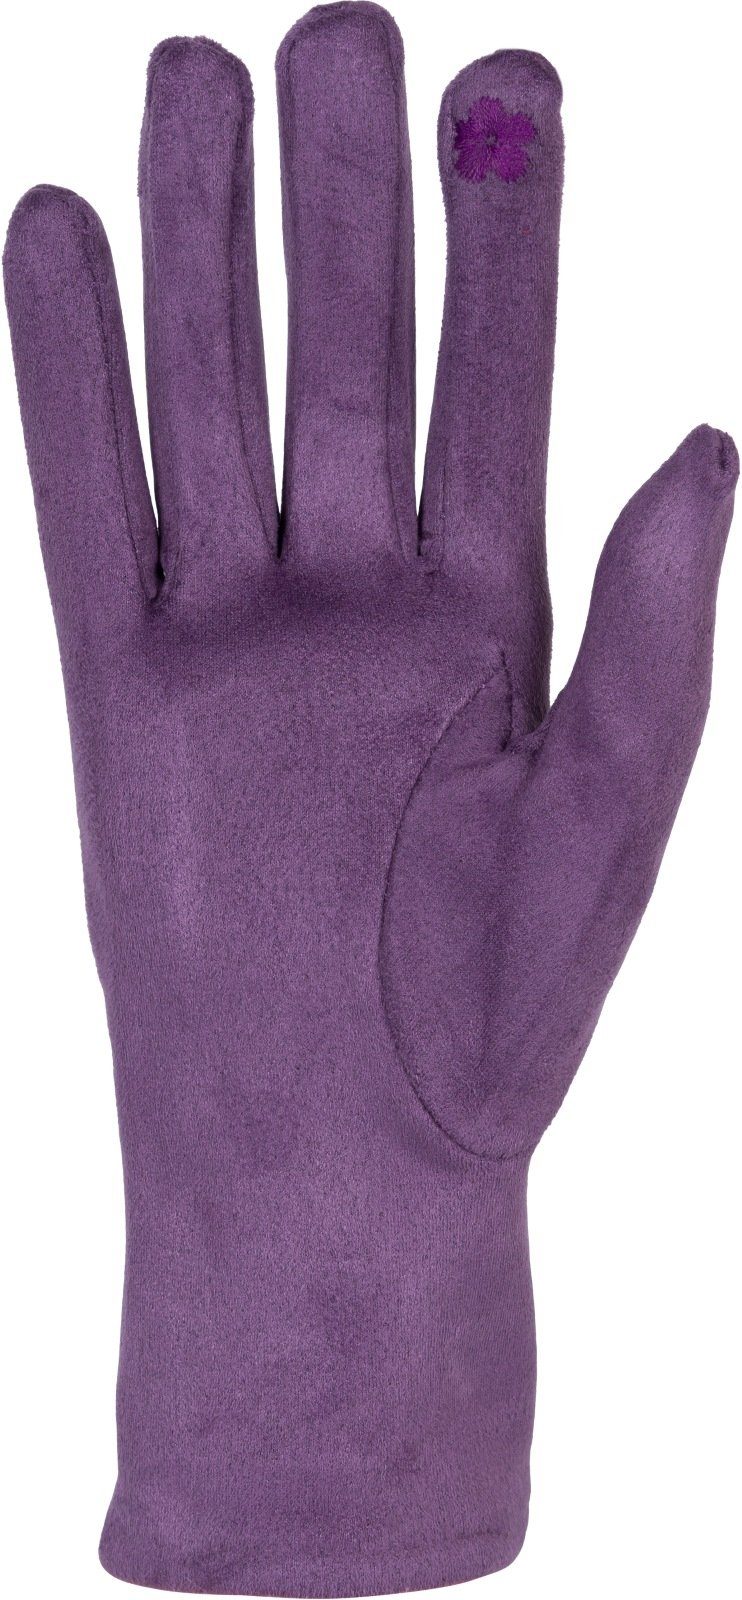 Violett Touchscreen Ziernähte Fleecehandschuhe Einfarbige Handschuhe styleBREAKER